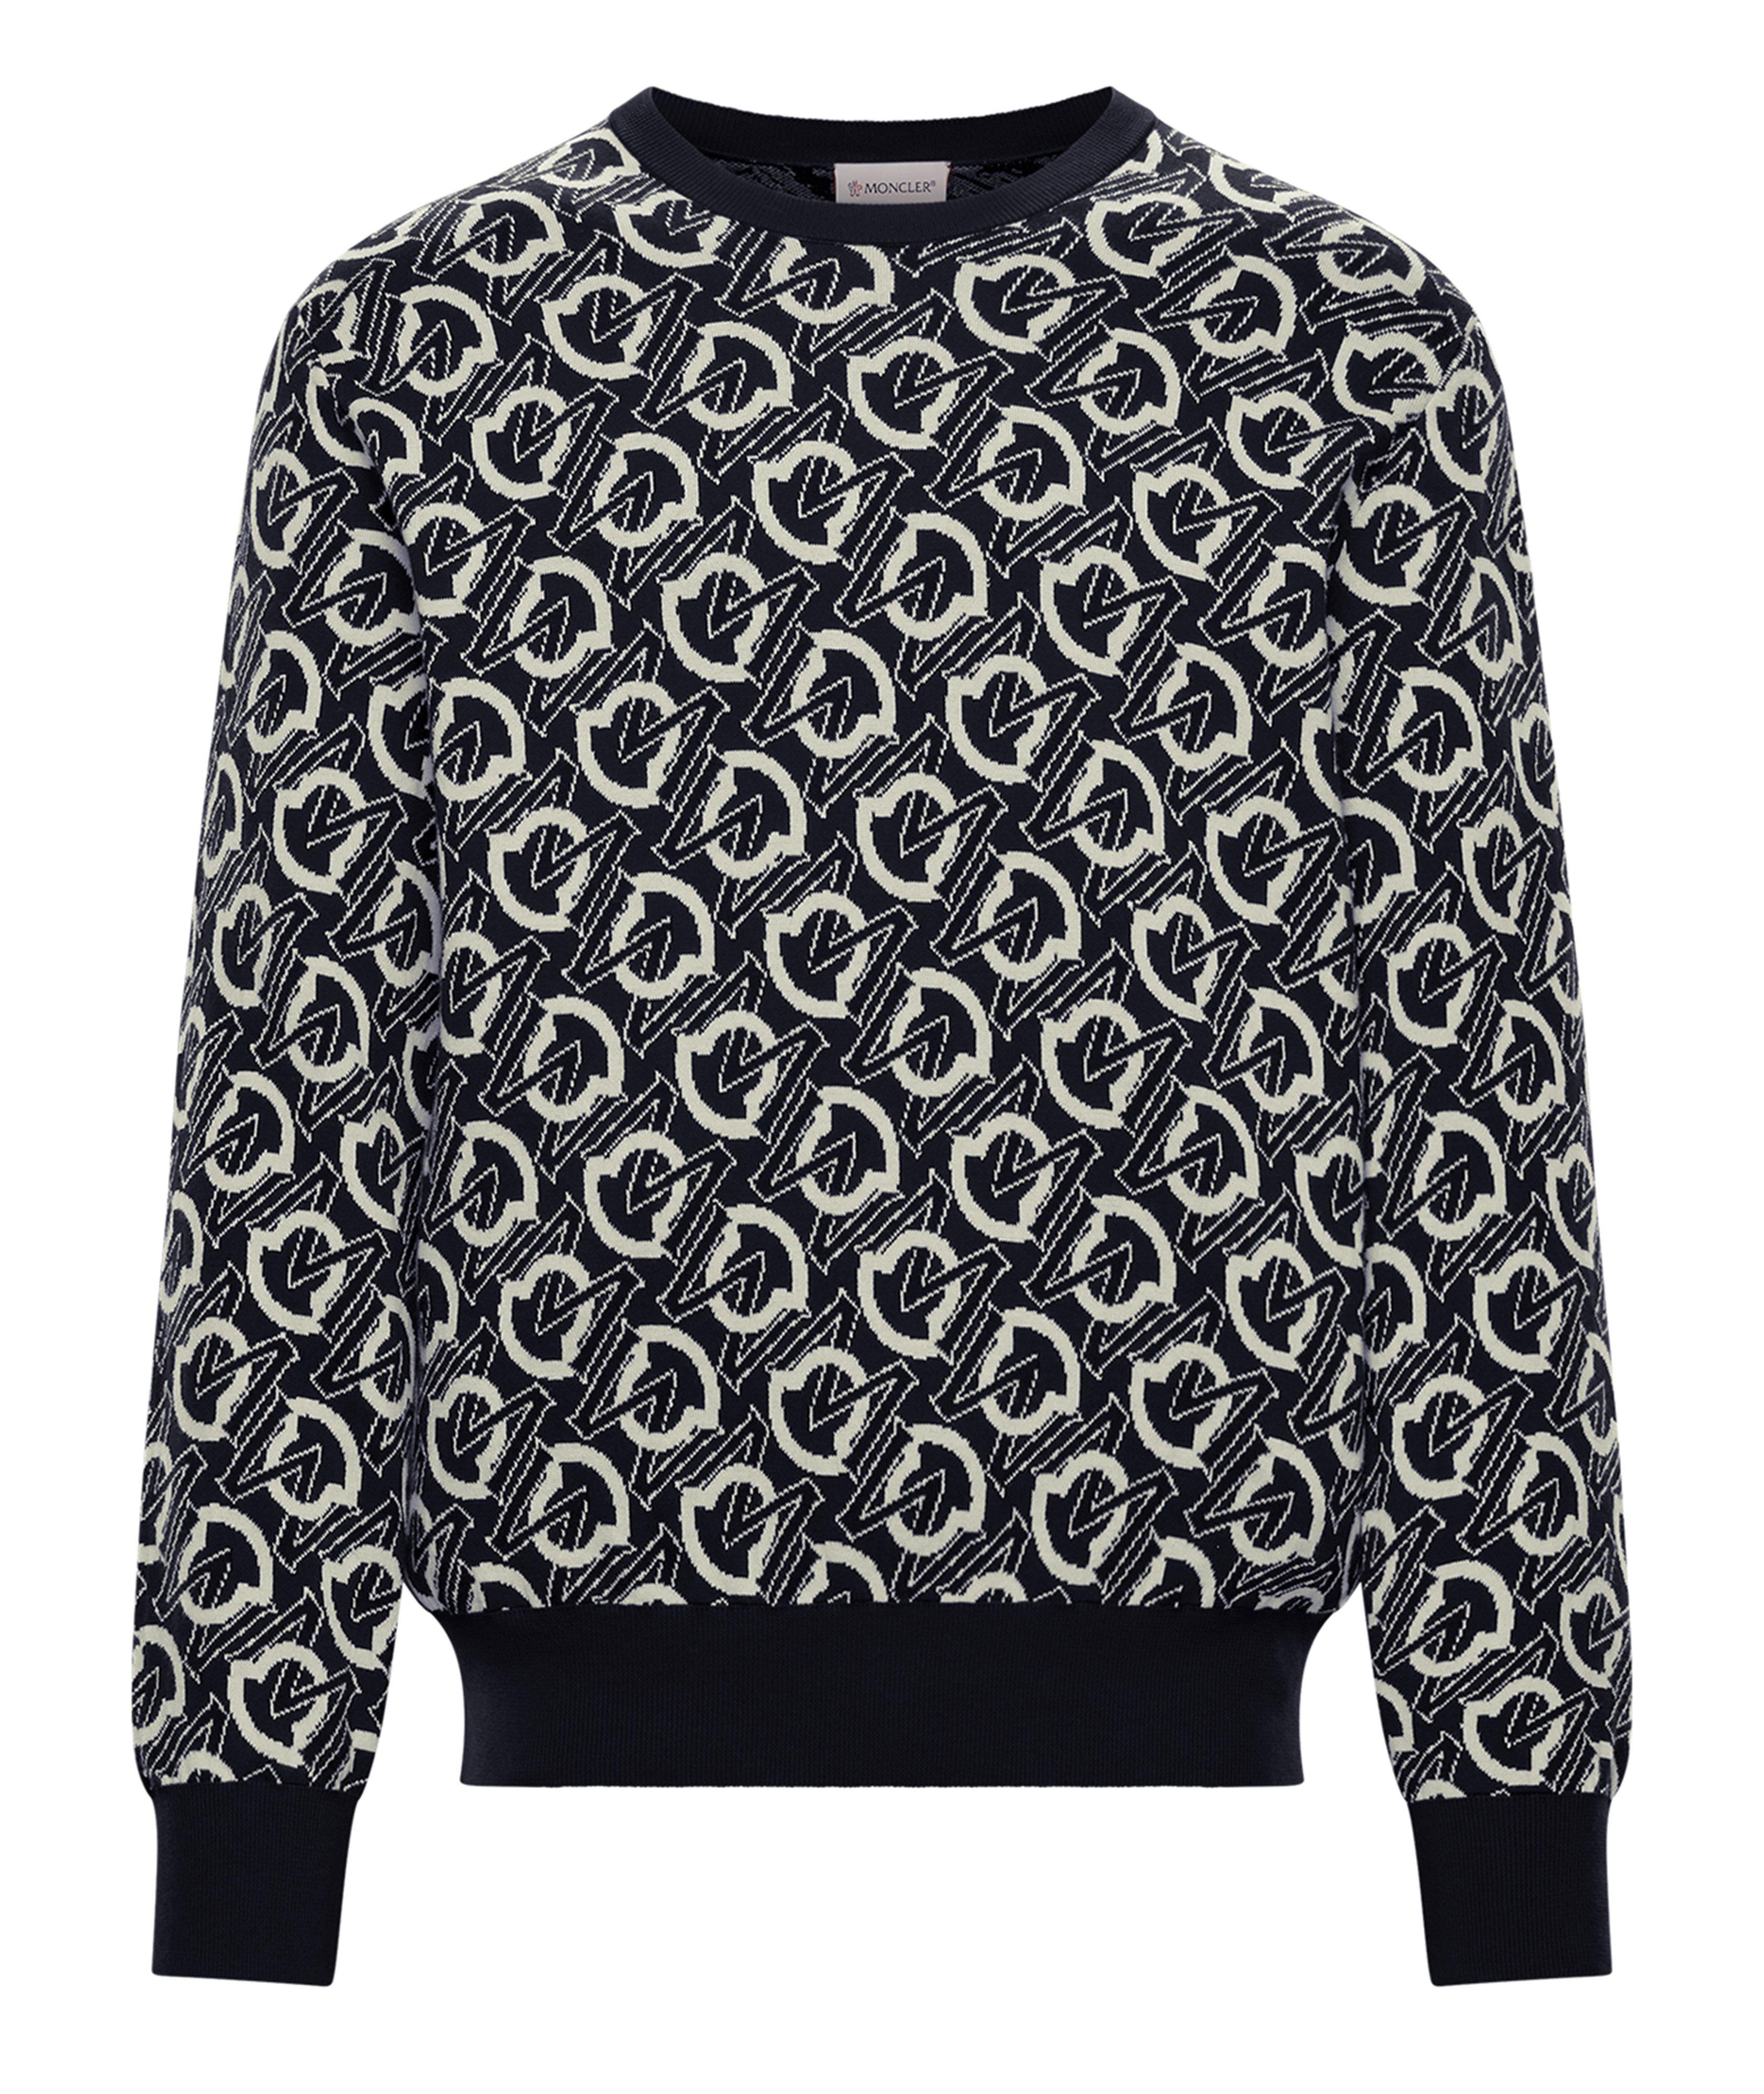 Graphic Cotton Sweater image 0